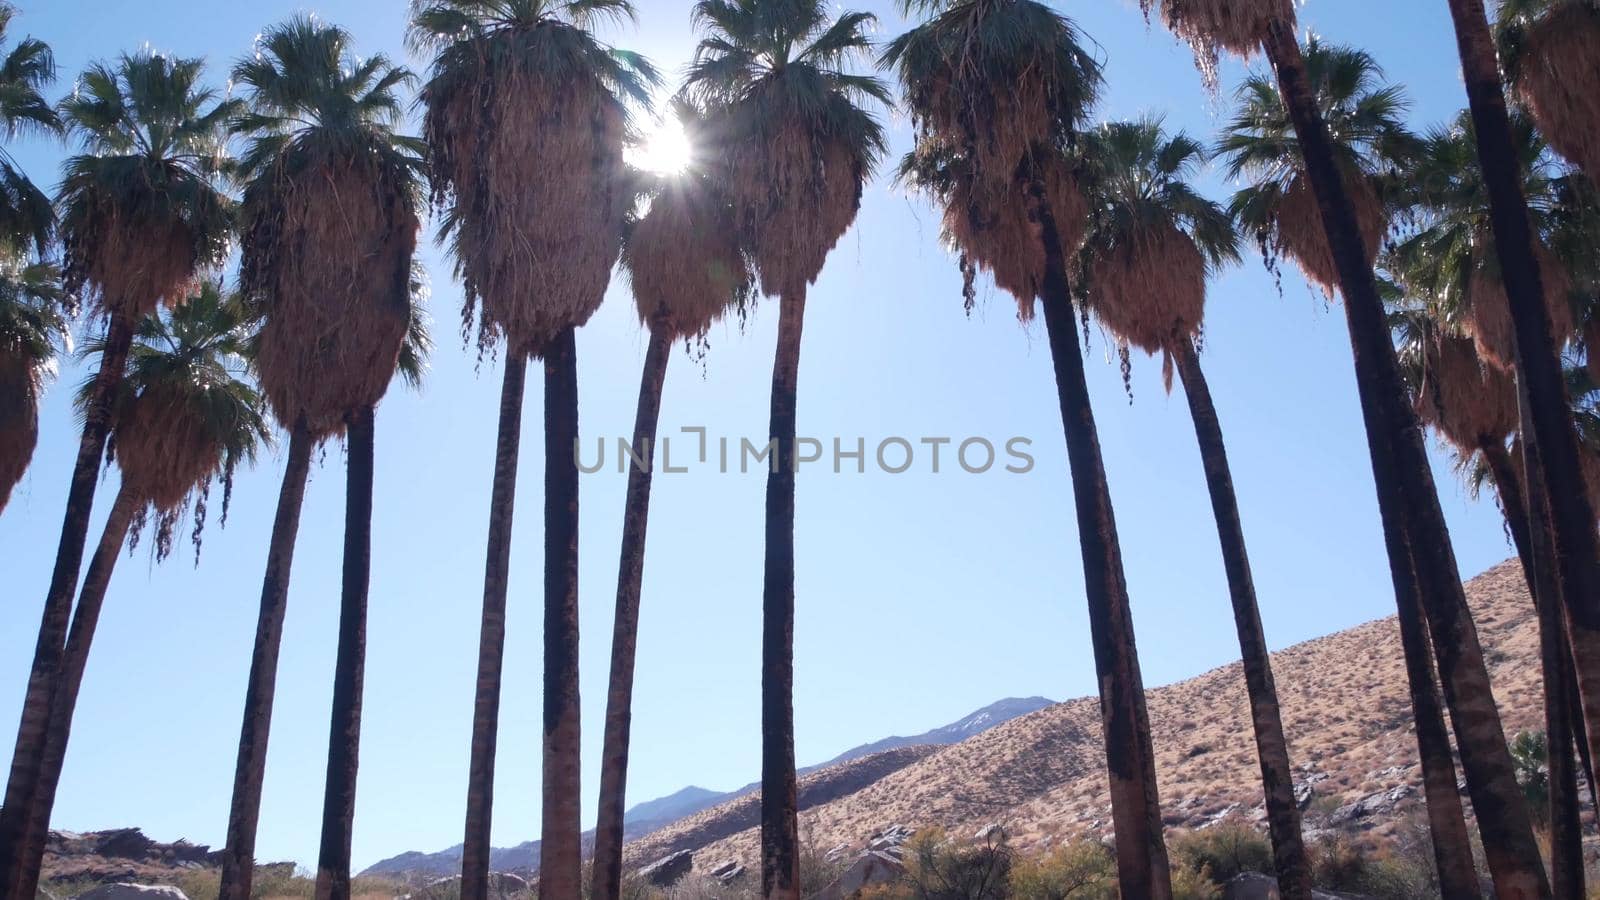 Row of palm trees, Palm Springs near Los Angeles, California desert oasis flora. by DogoraSun